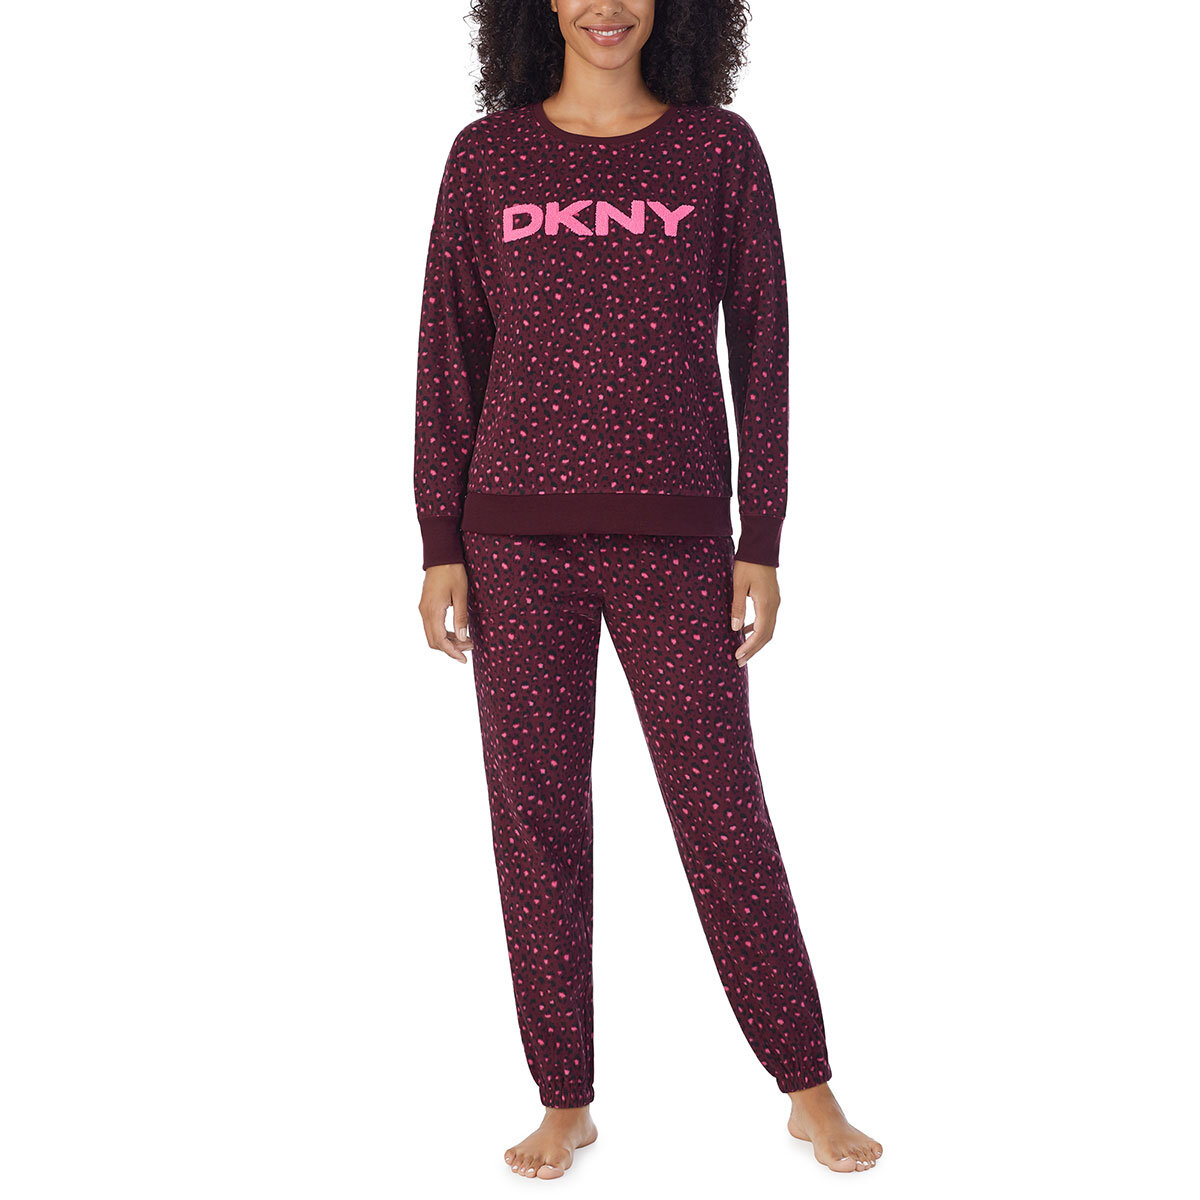  DKNY Girls' Leggings Set - 2 Piece Fleece Pullover